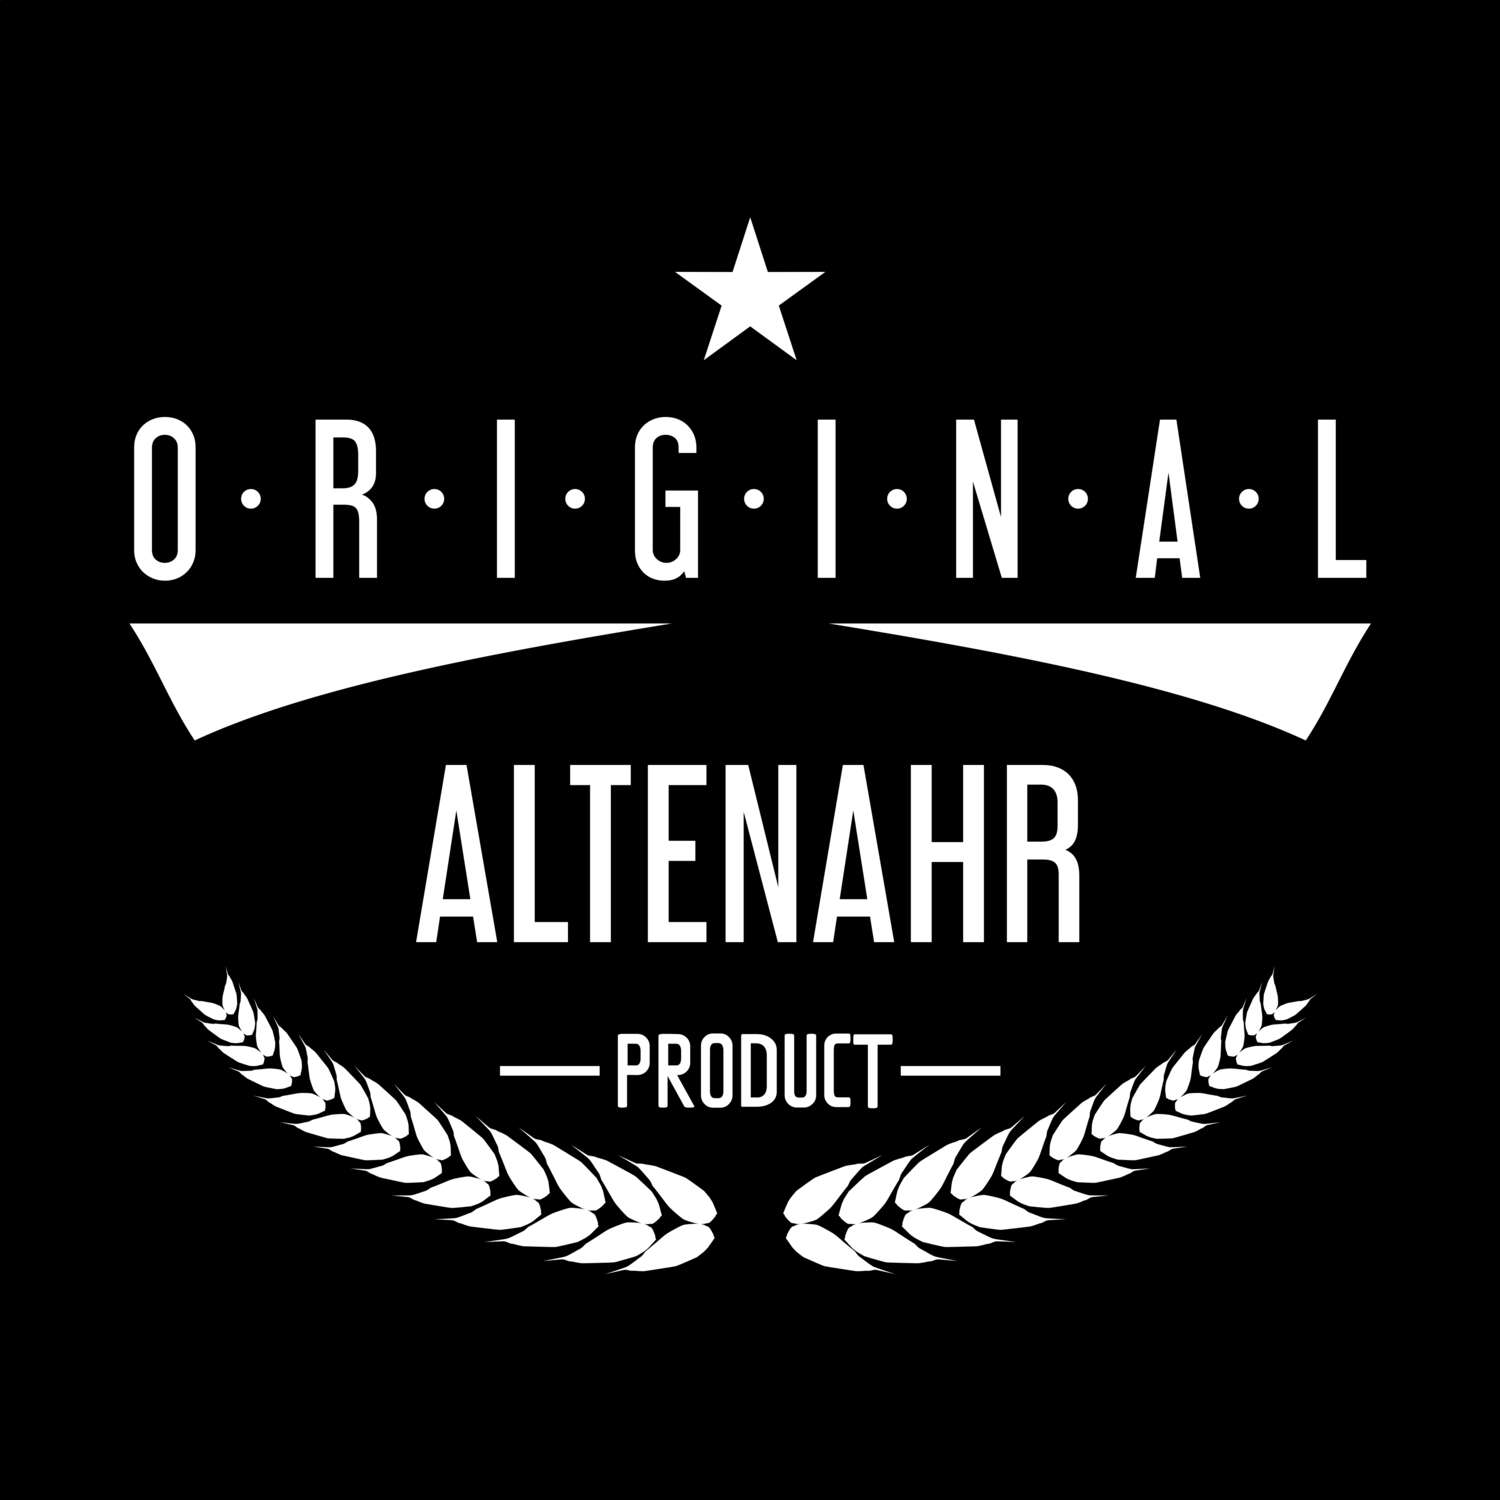 Altenahr T-Shirt »Original Product«